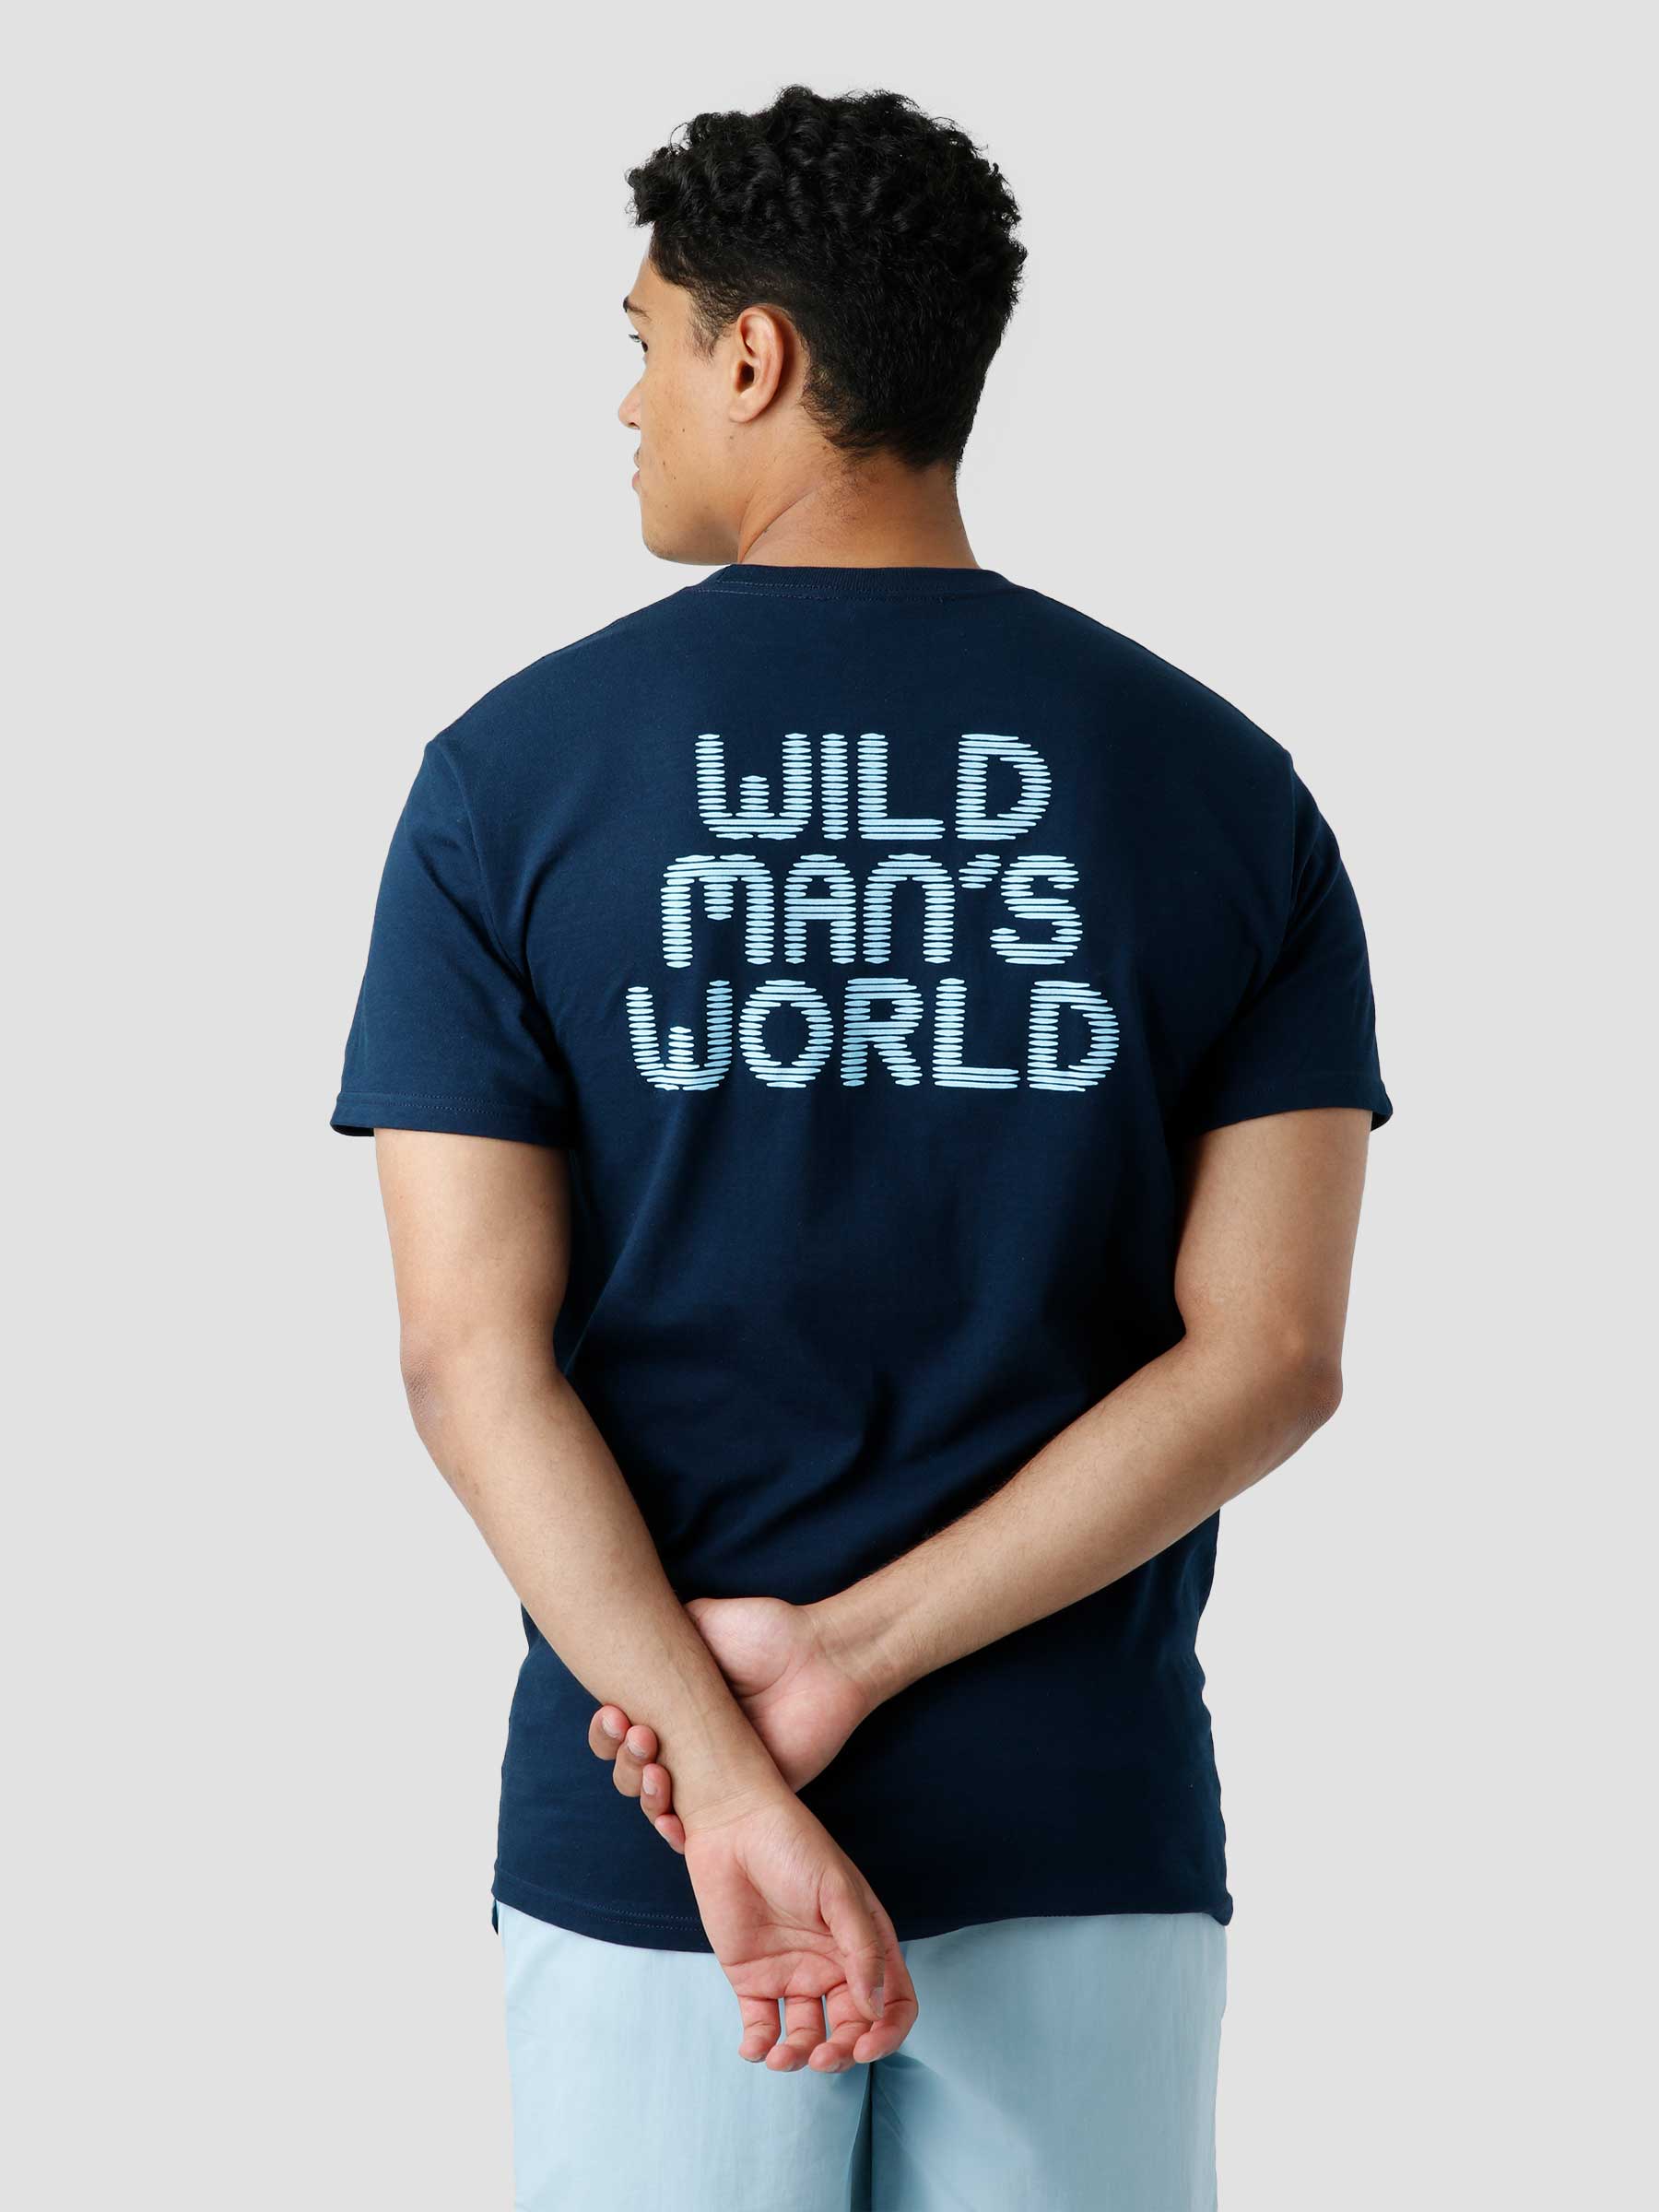 Wild World S/S T-Shirt Navy TS01632